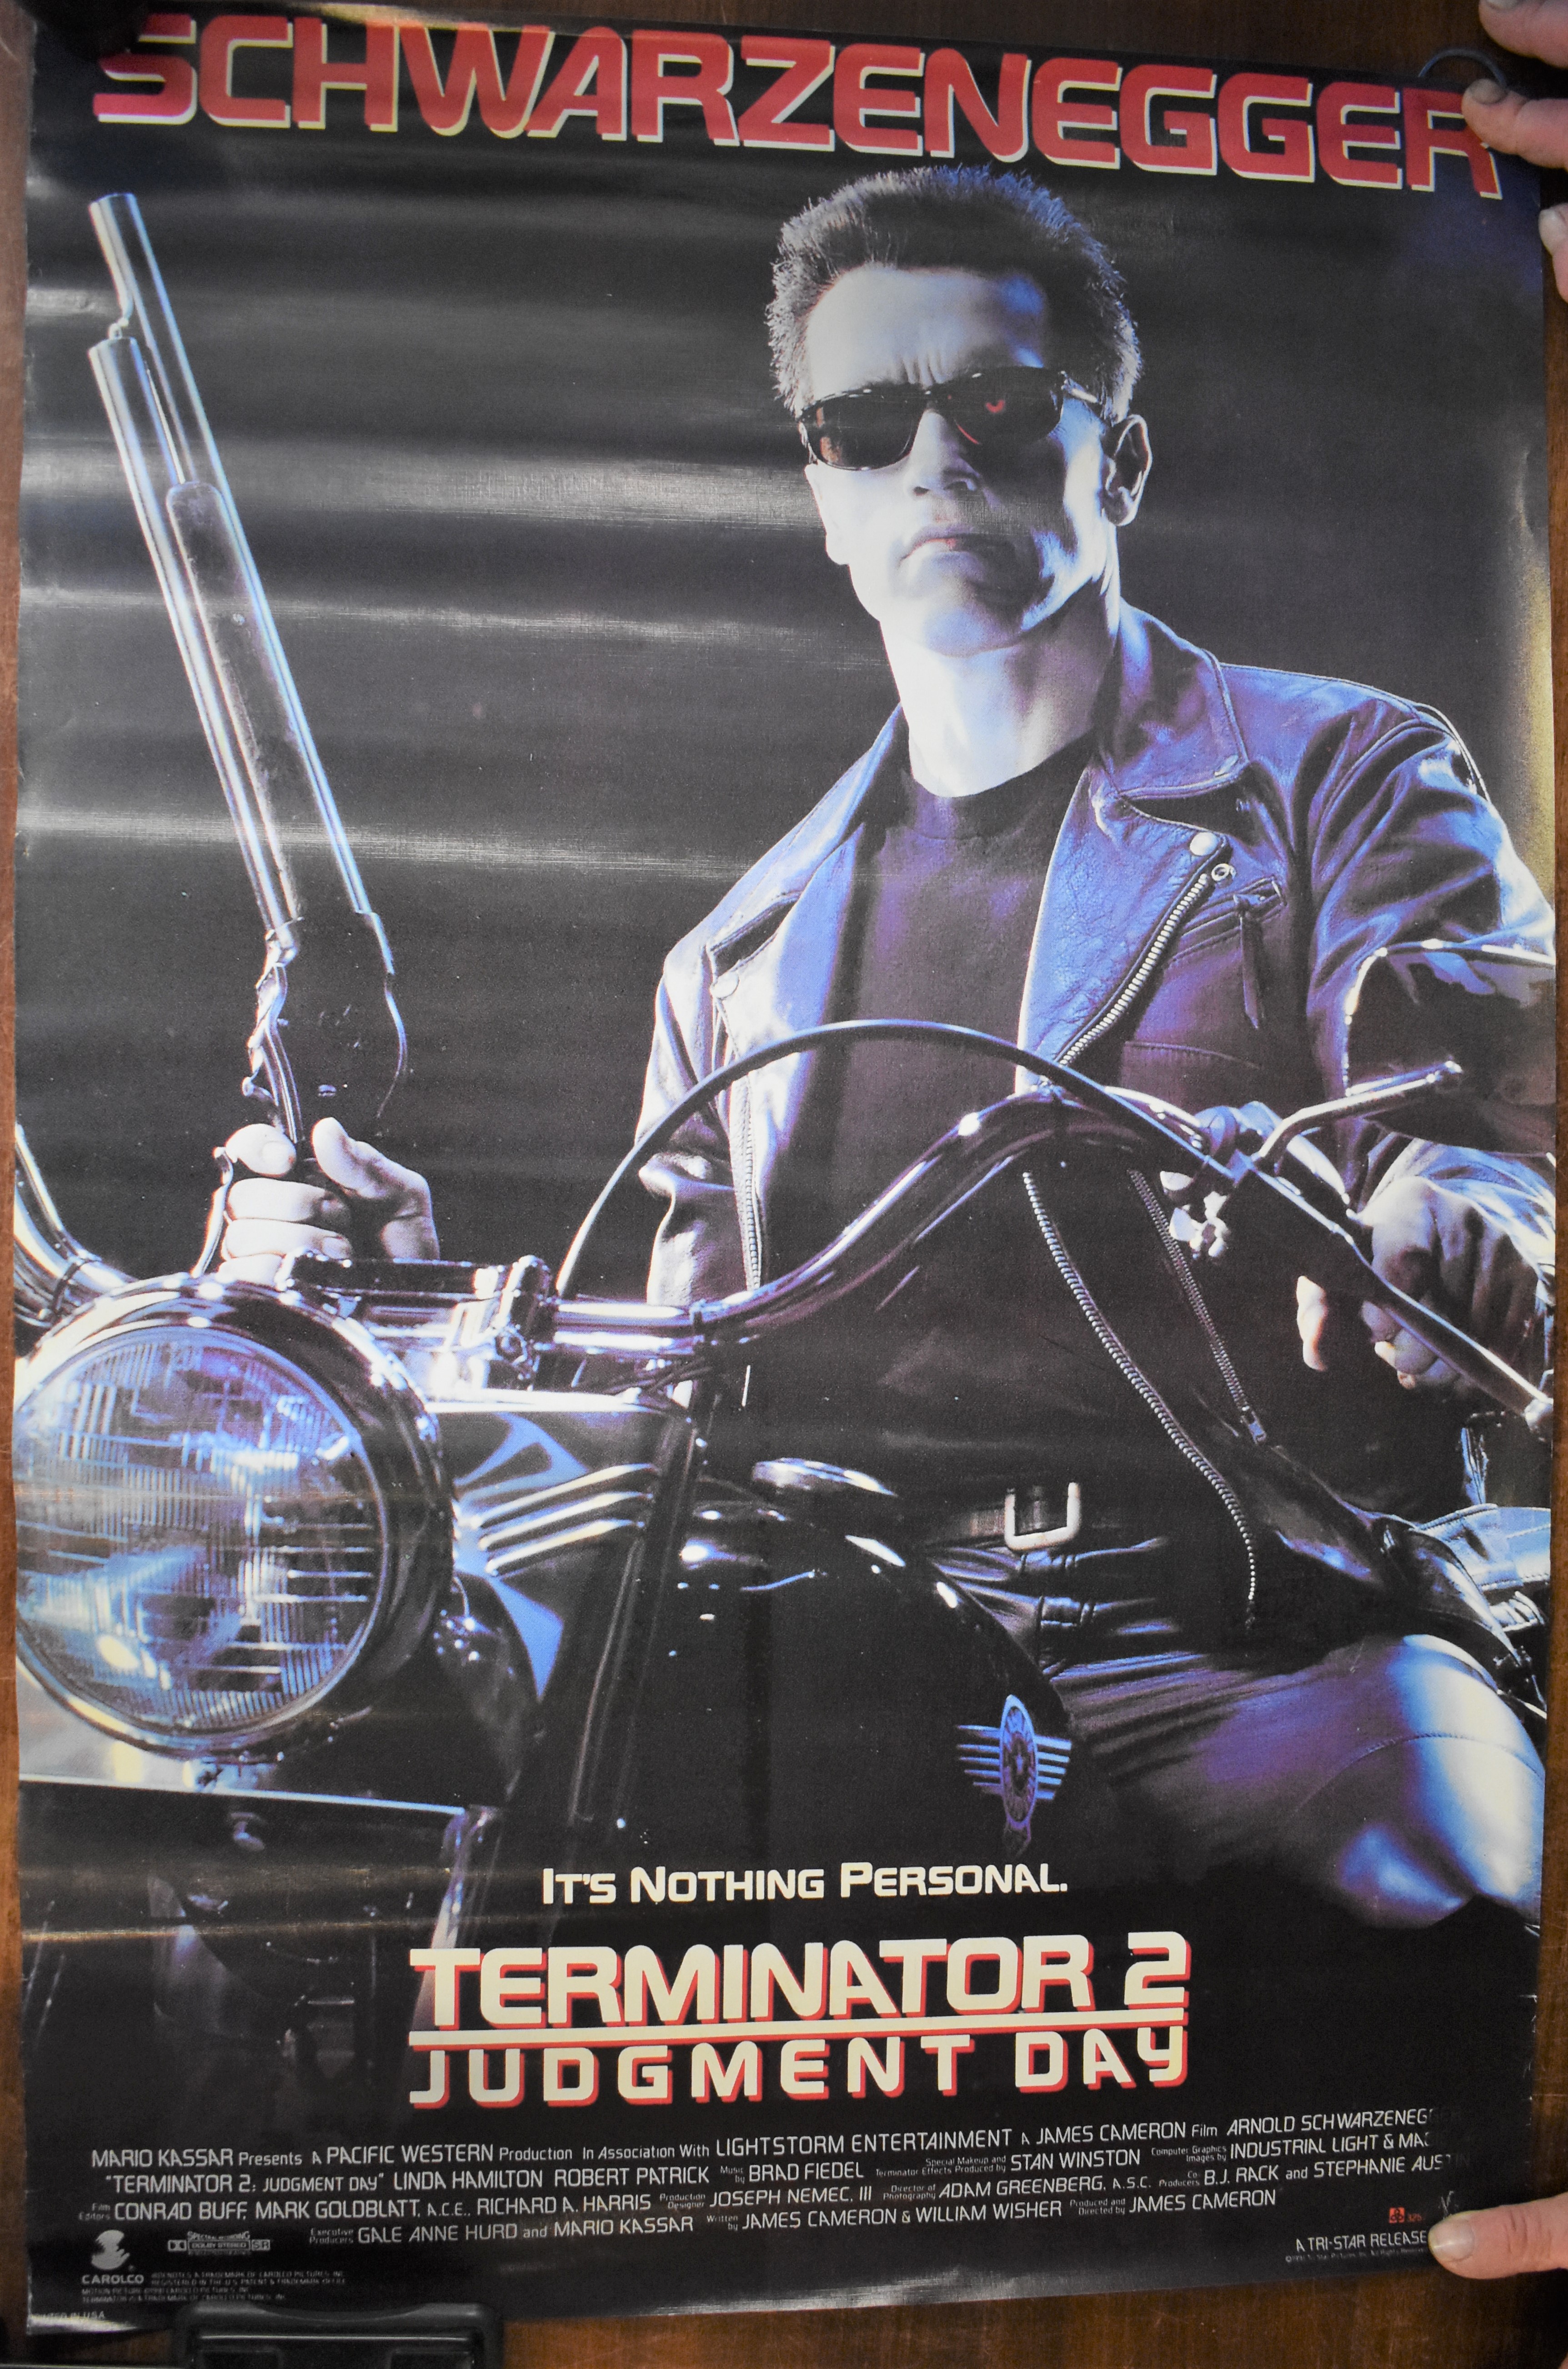 Terminator 2 (Judgement Day) - Cinematic release poster, starring Arnold Schwarzenegger release